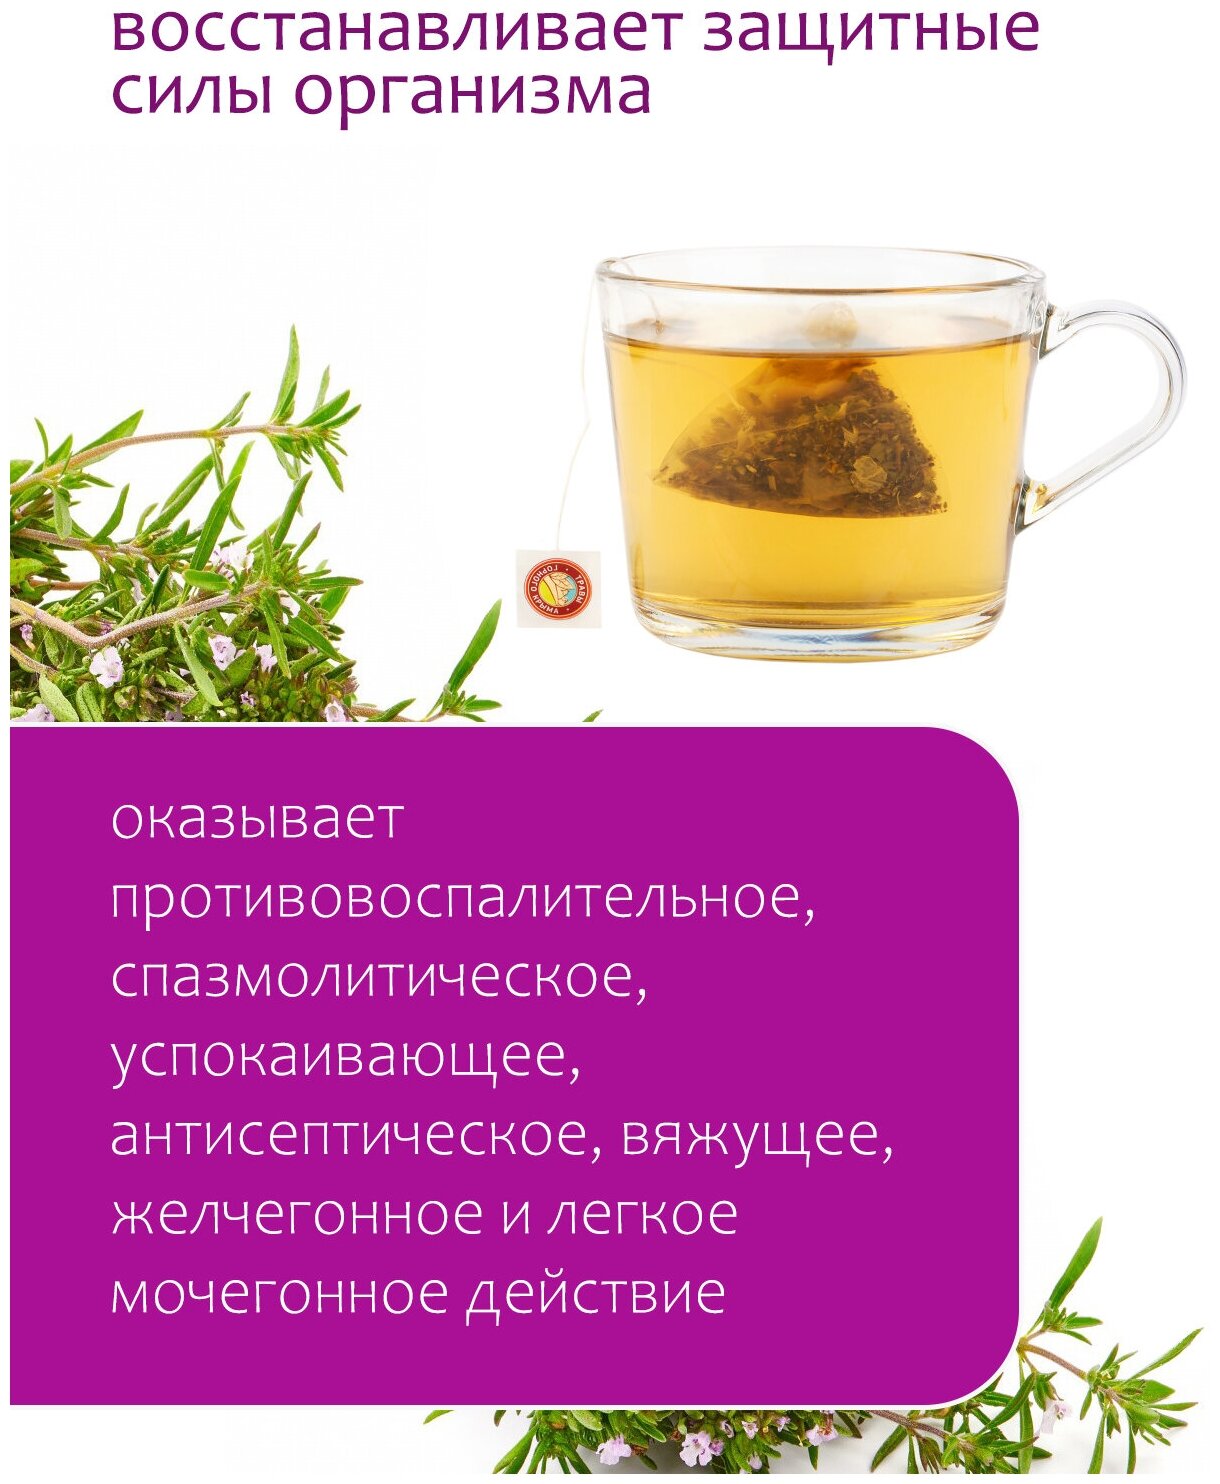 Чабрец чай травяной сушеный горный, Травы горного Крыма, в пакетиках 25 шт.